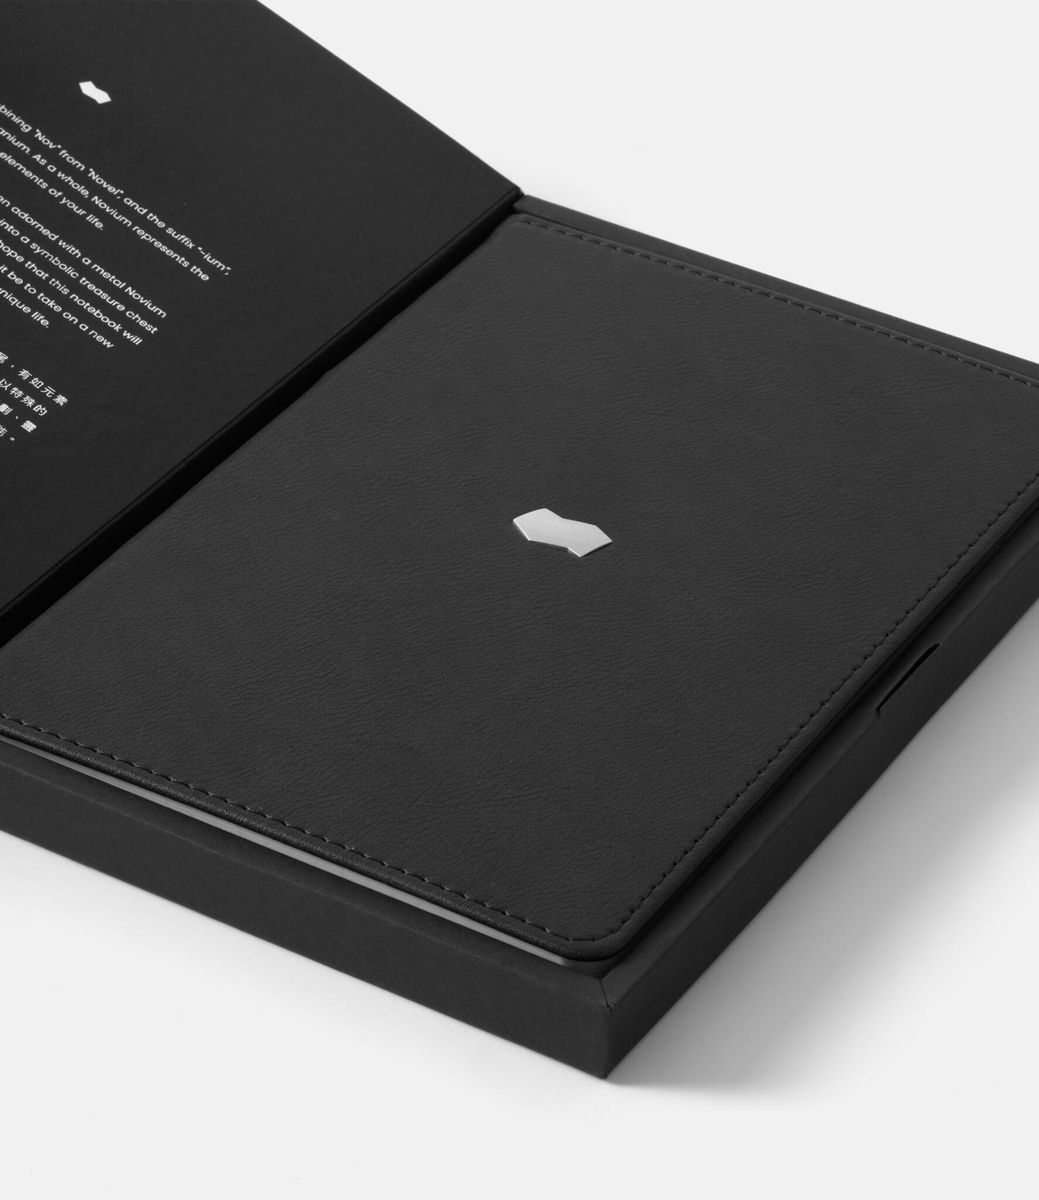 Novium Leatherette Notebook — блокнот в твёрдой обложке